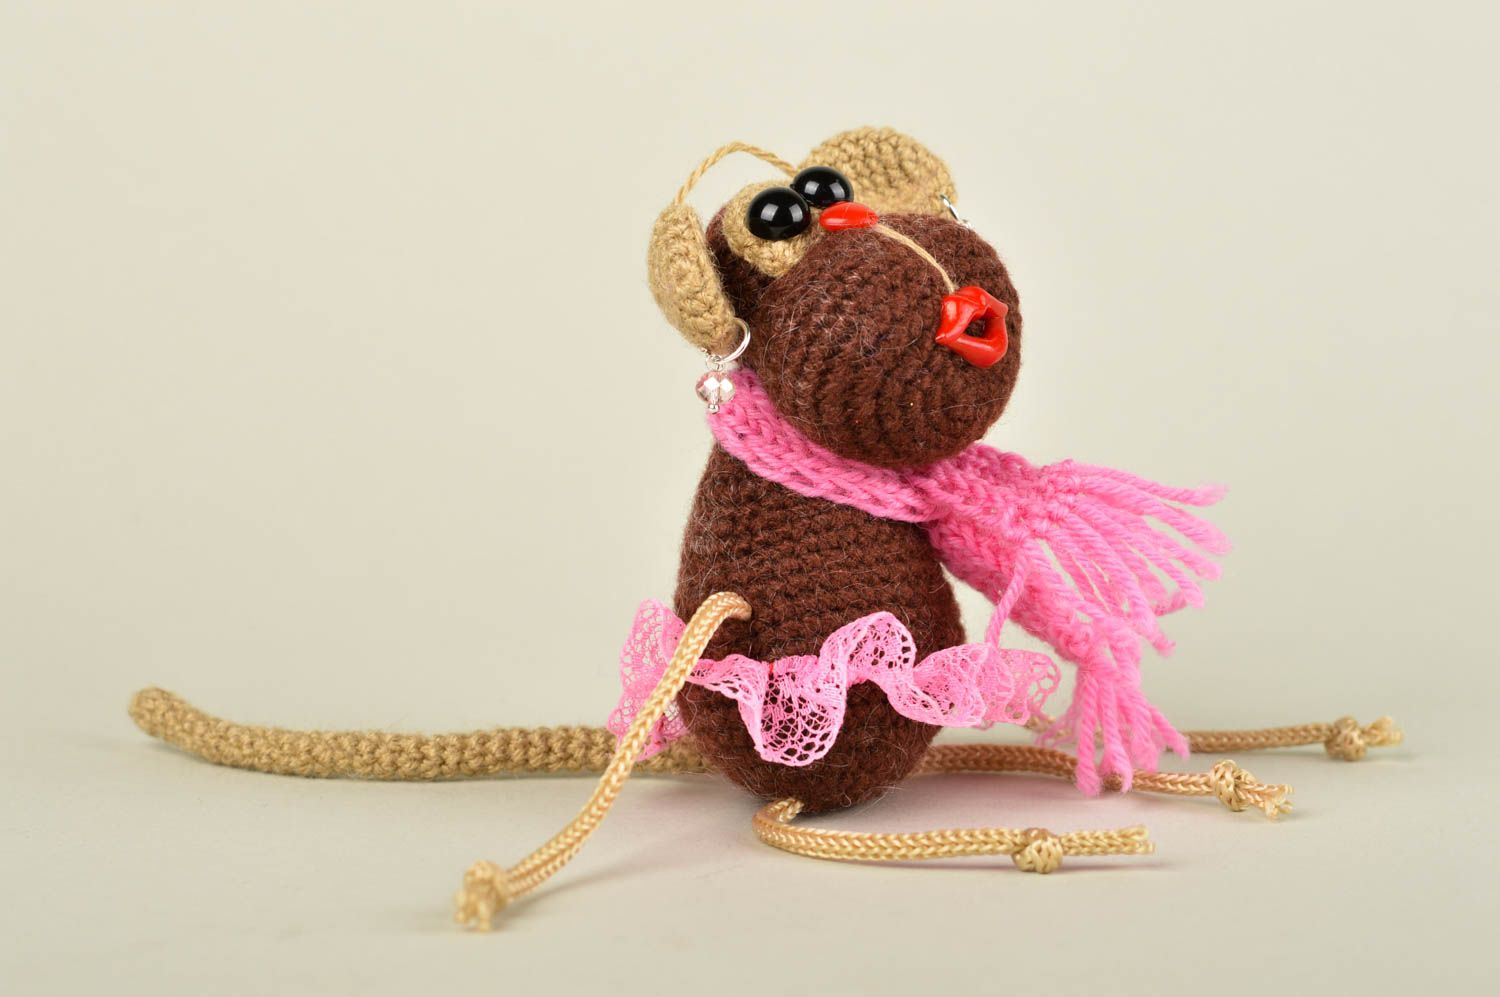 Hand-crocheted creative toy handmade stylish toy for babies nursery decor photo 1